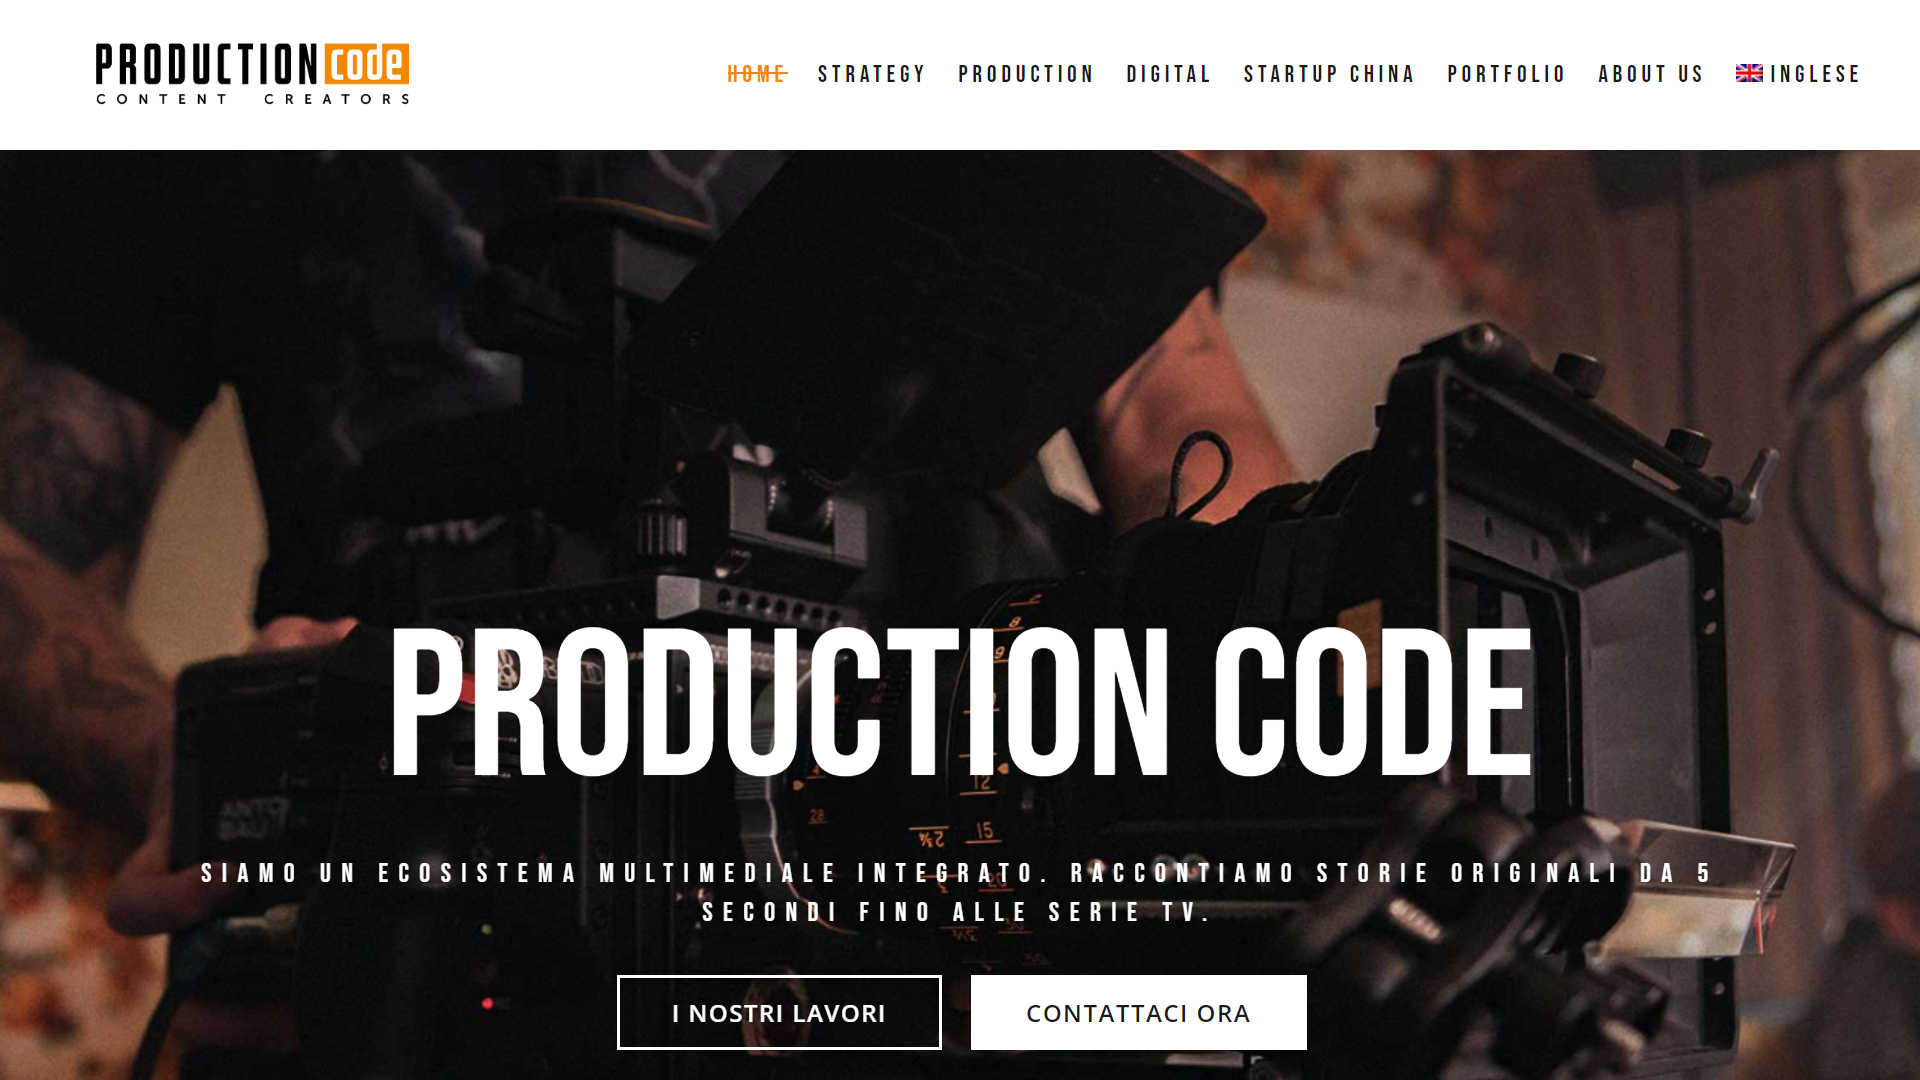 Uomo con telecamera: production code